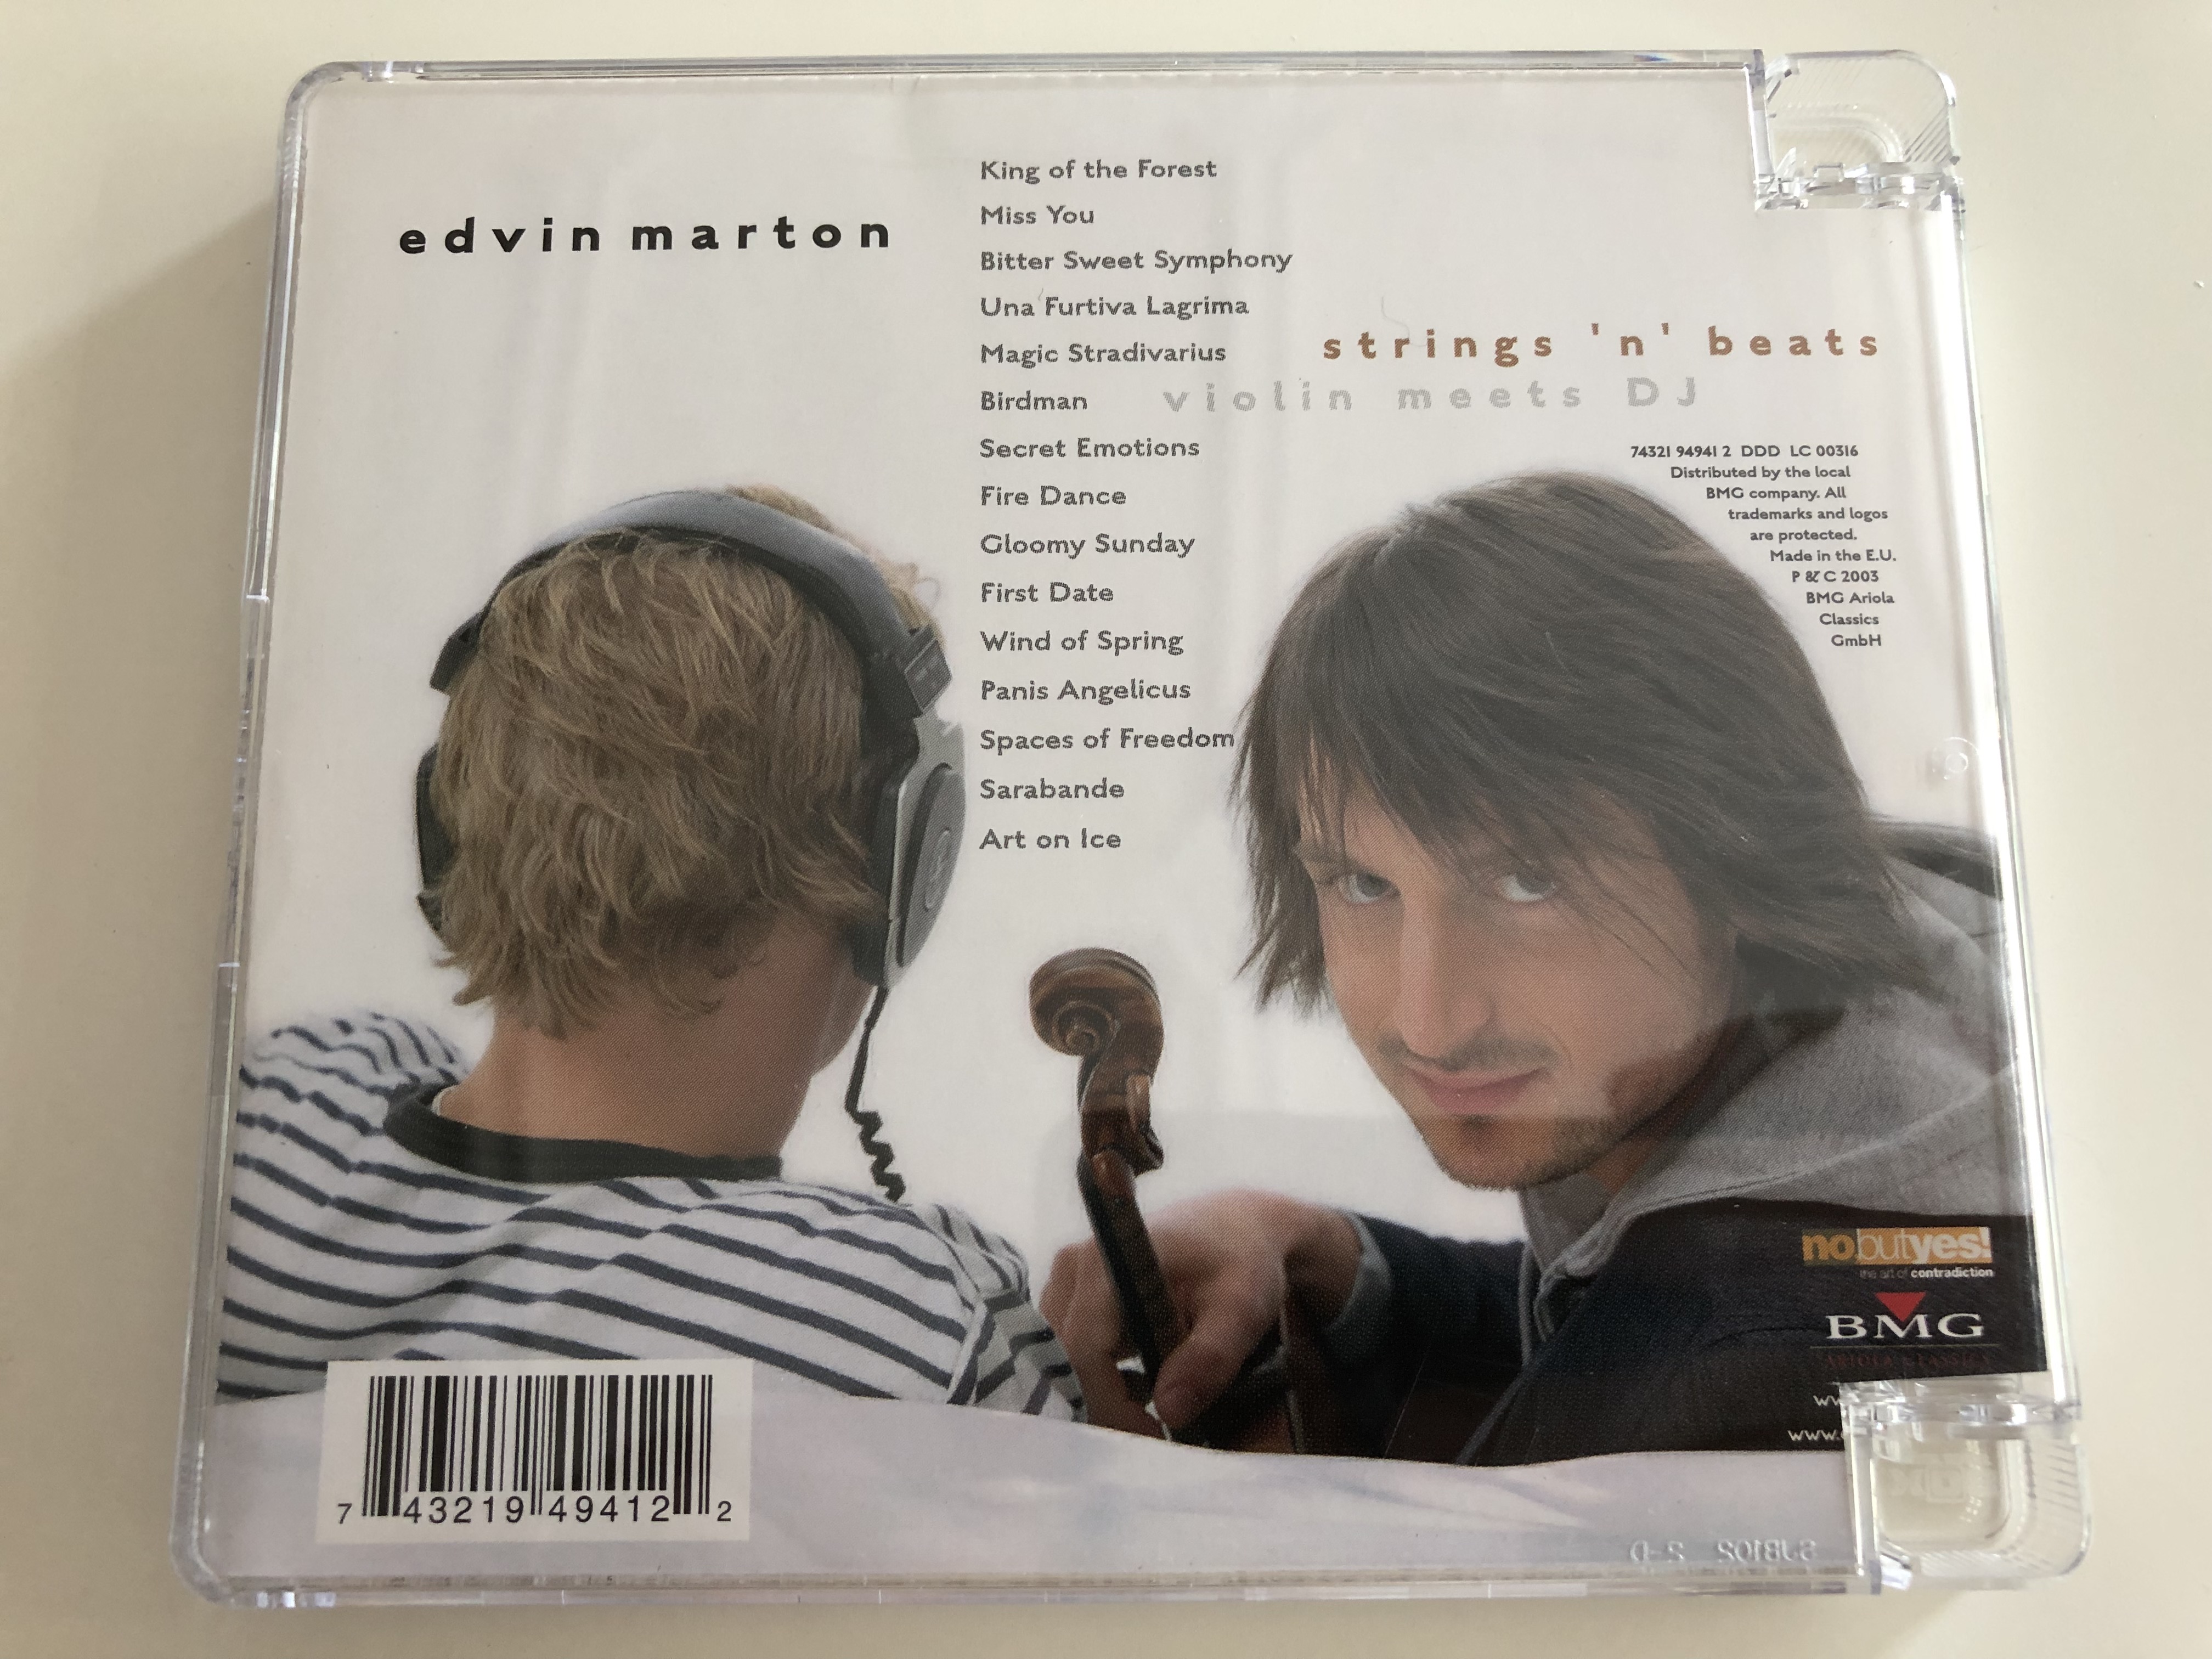 edvin-marton-string-n-beats-bitter-sweet-symphony-birdman-gloomy-sunday-wind-of-spring-violin-meets-dj-audio-cd-2005-bmg-classics-11-.jpg